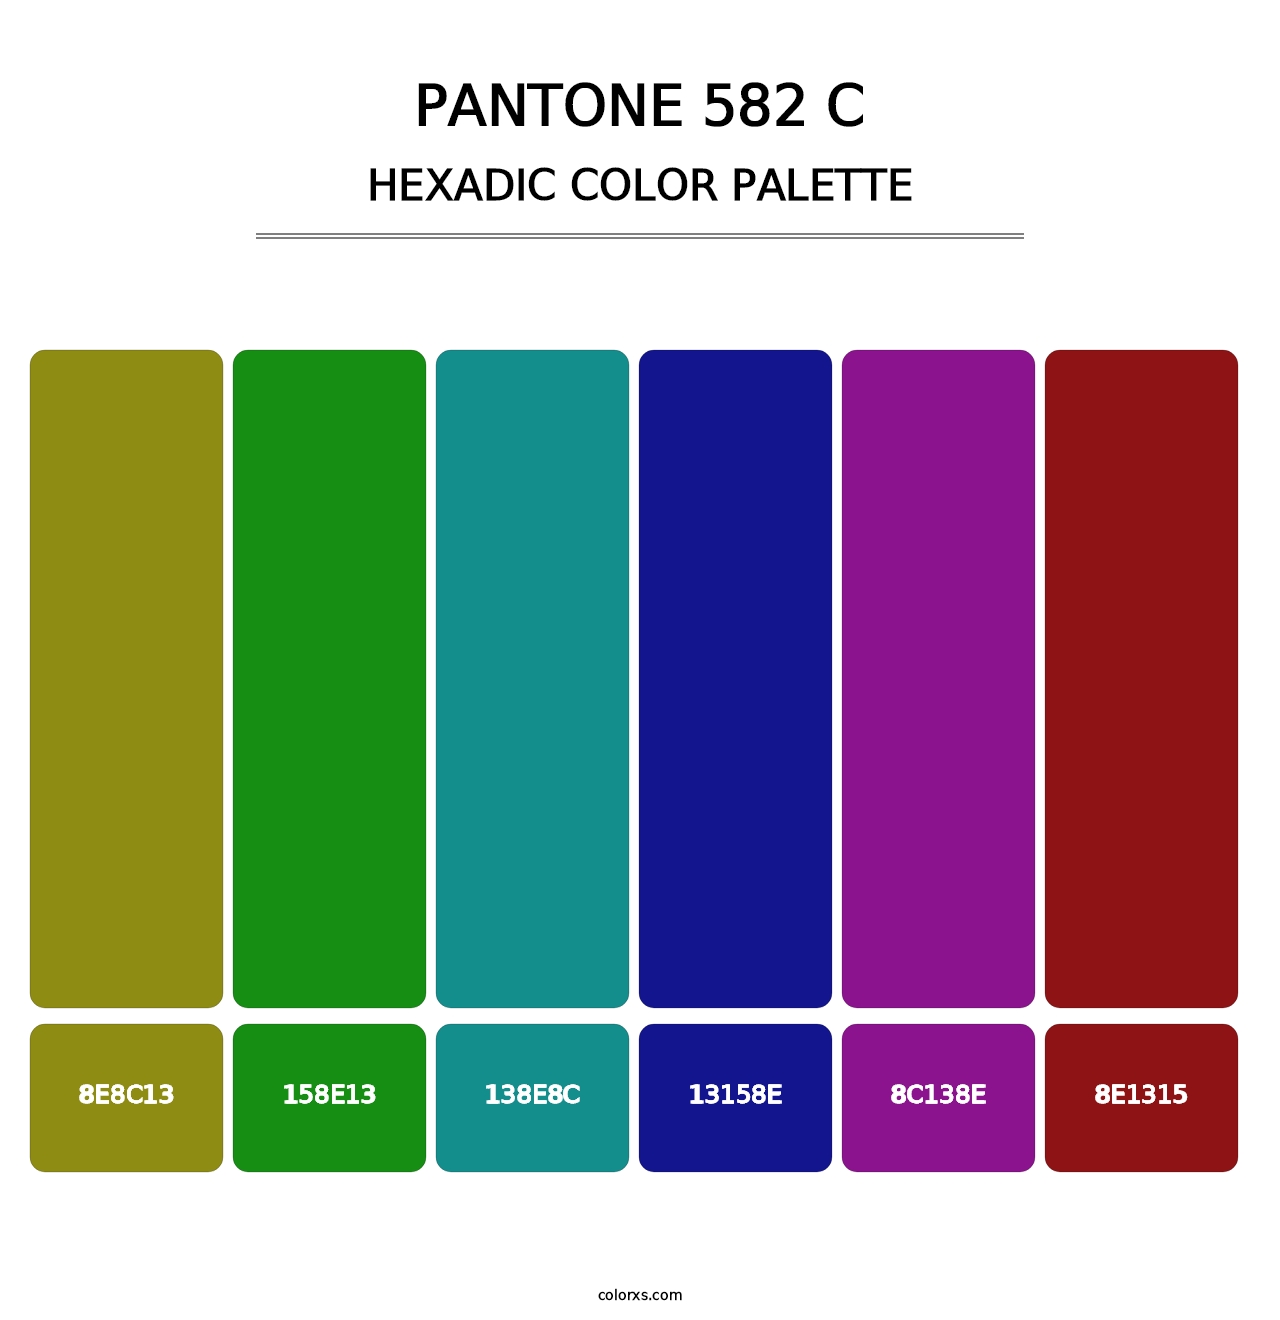 PANTONE 582 C - Hexadic Color Palette